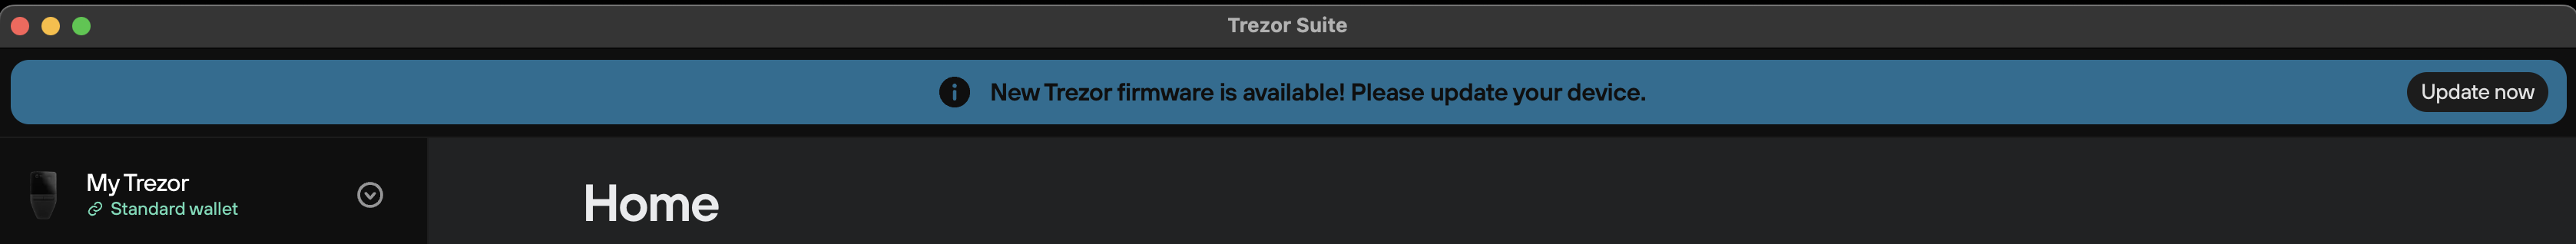 trezor-firmware/docs/legacy/helpbitcoin.fun at main · trezor/trezor-firmware · GitHub